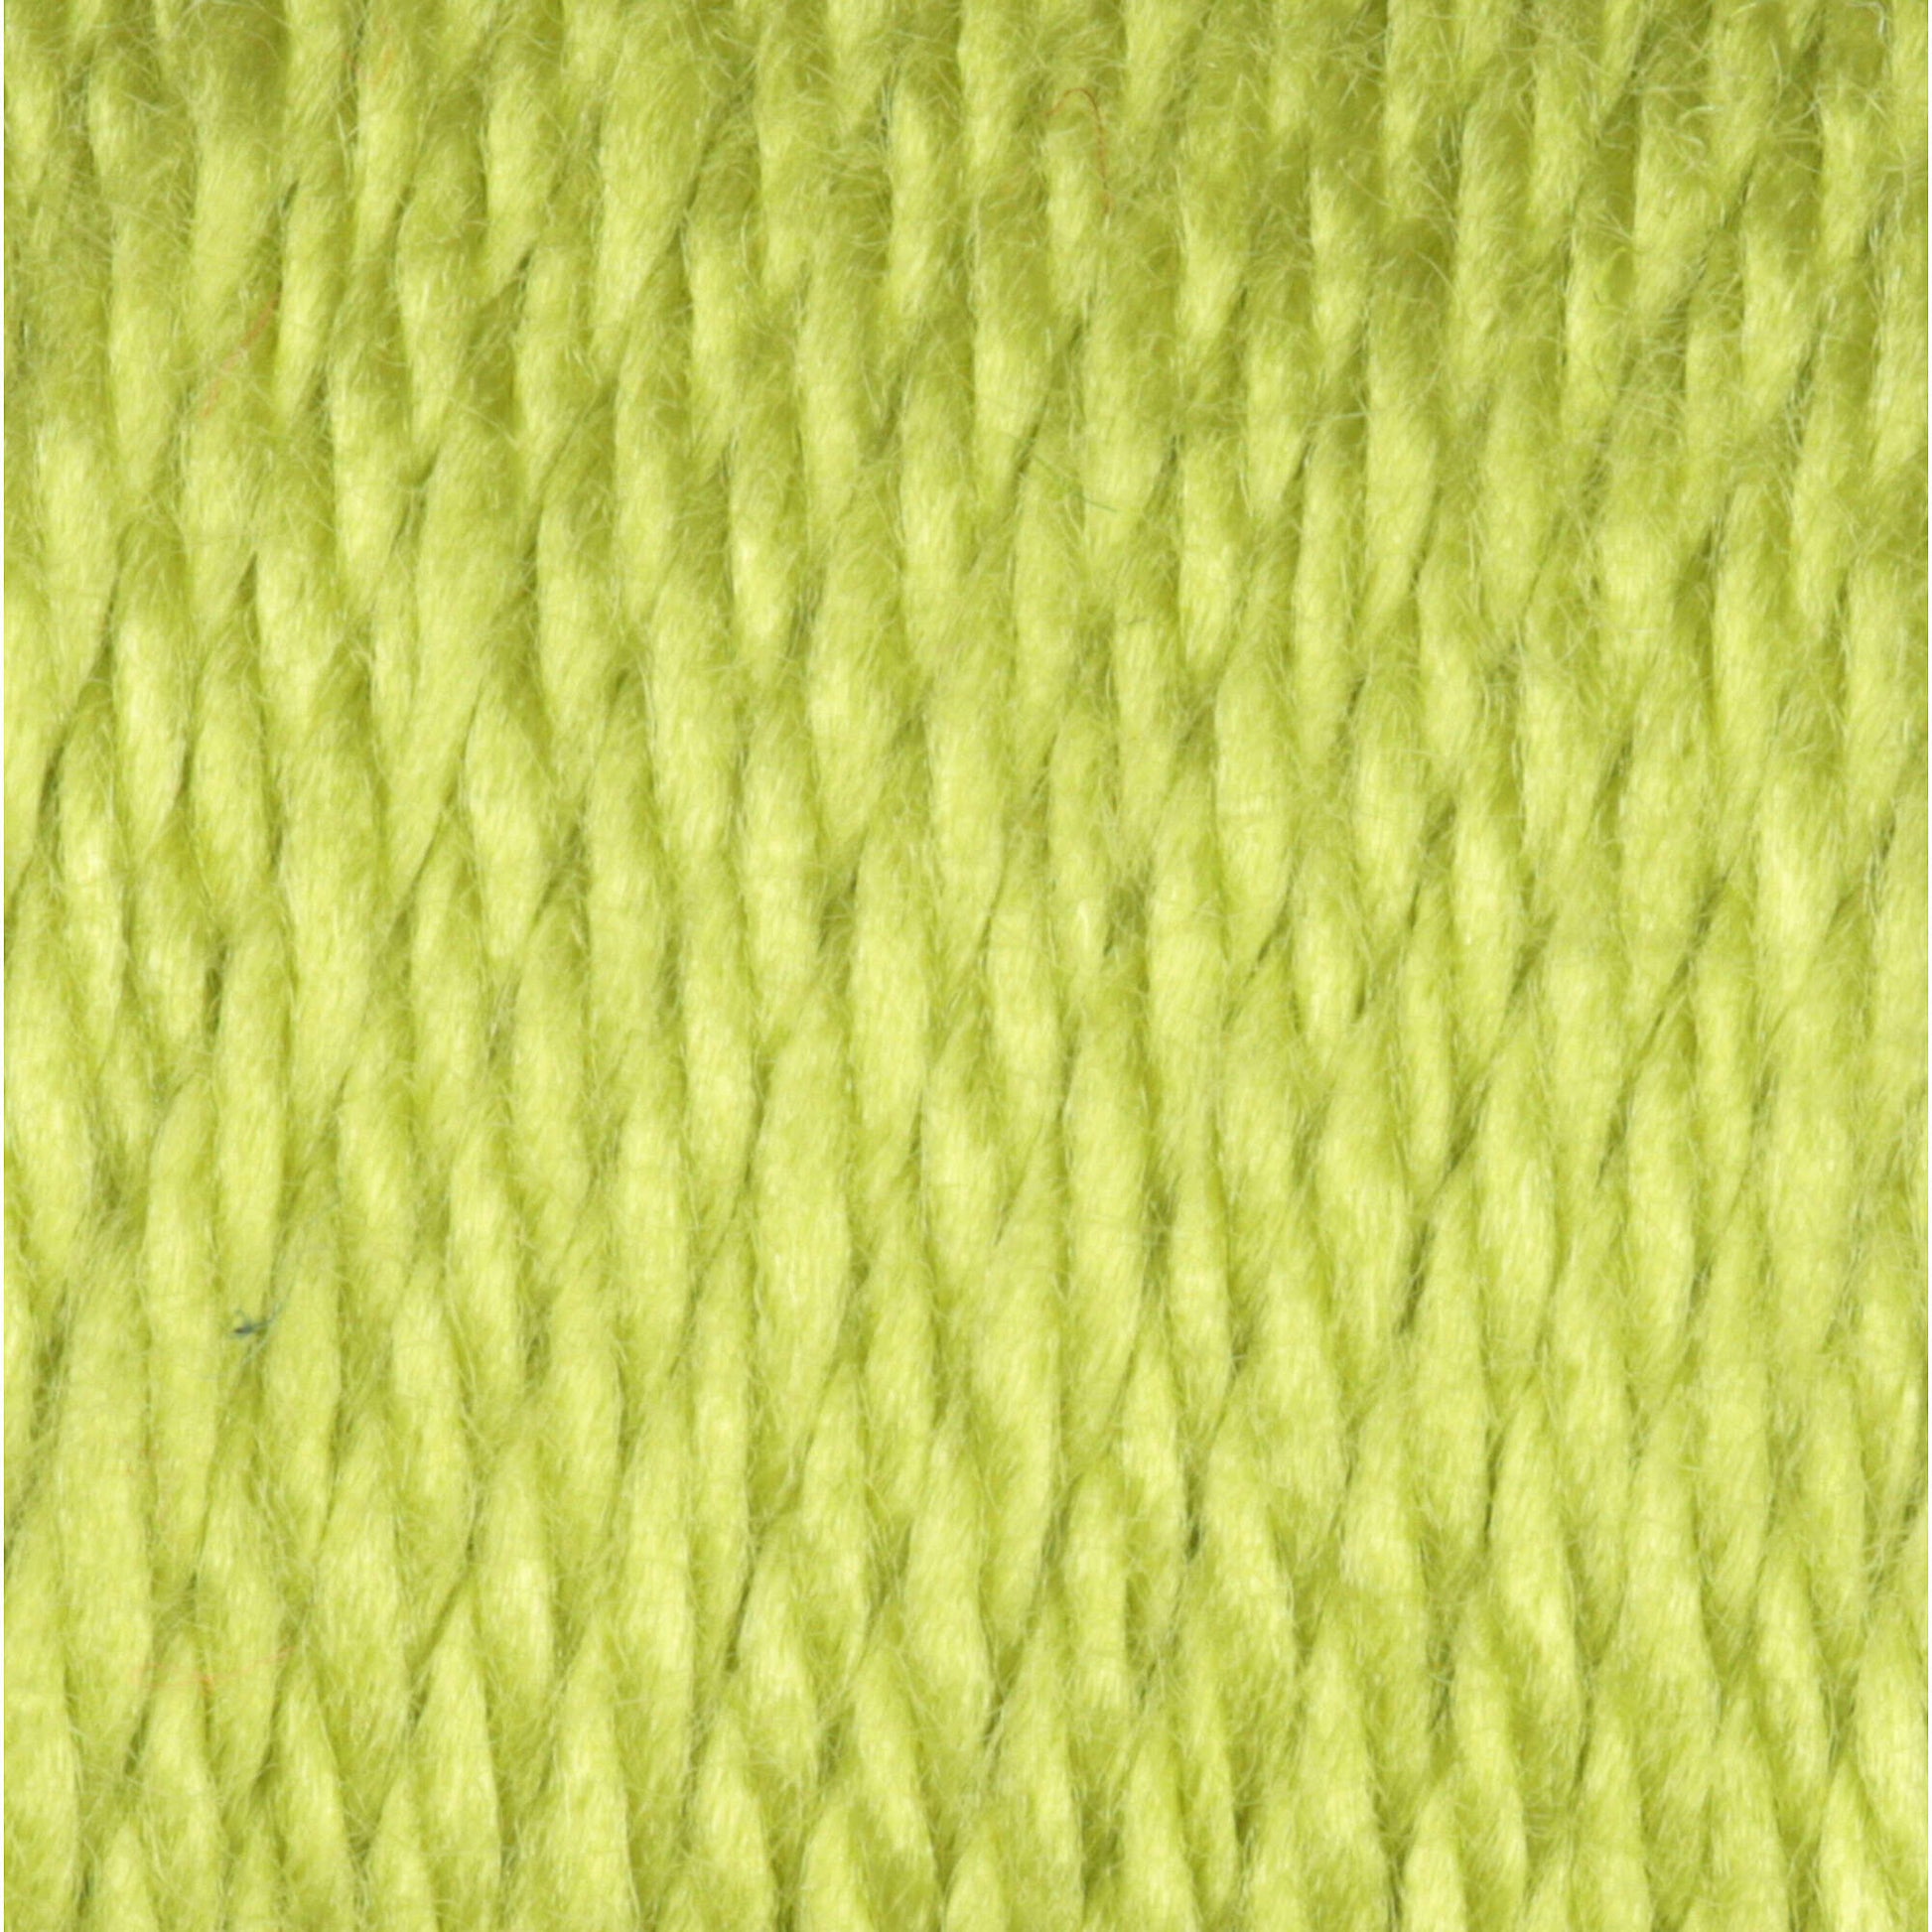 Caron Simply Soft Burgundy Yarn - 3 Pack of 170g/6oz - Acrylic - 4 Medium  (Worsted), 3 - Harris Teeter